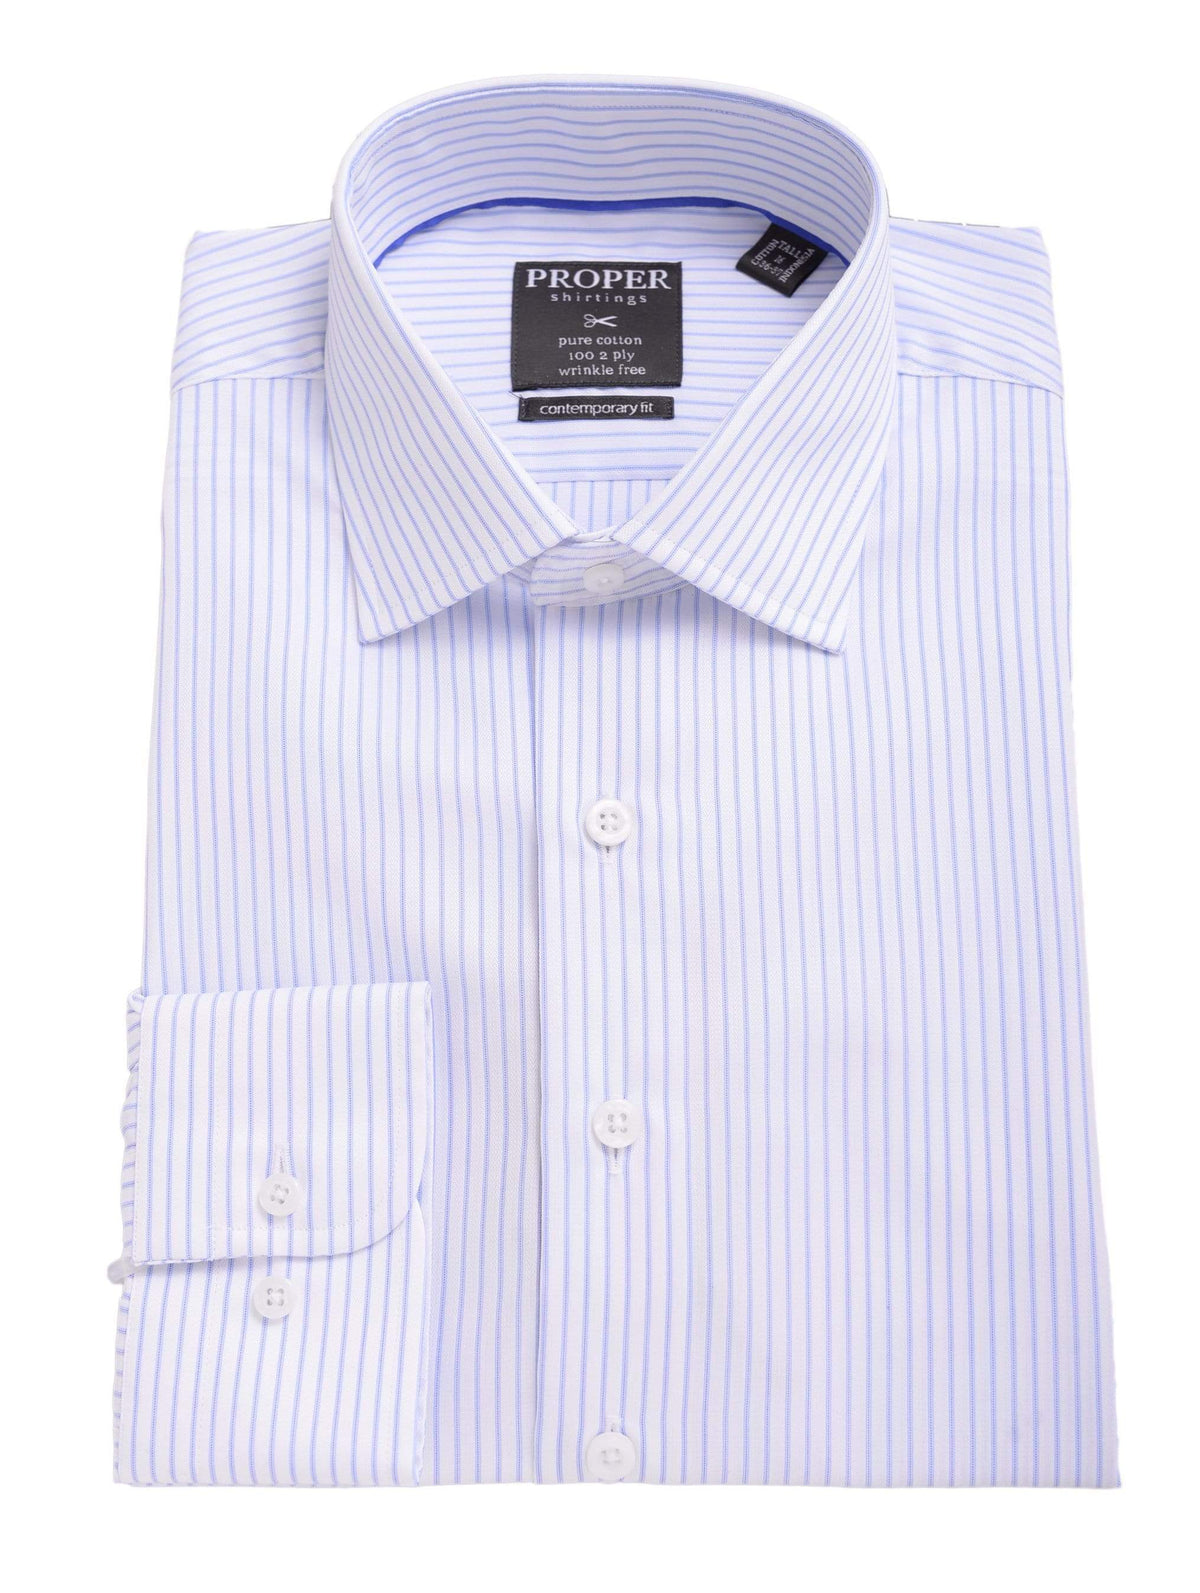 Proper Shirtings SHIRTS 17 1/2 34/35 Mens Slim Fit Blue Striped Spread Collar 100 2 Ply Cotton Dress Shirt